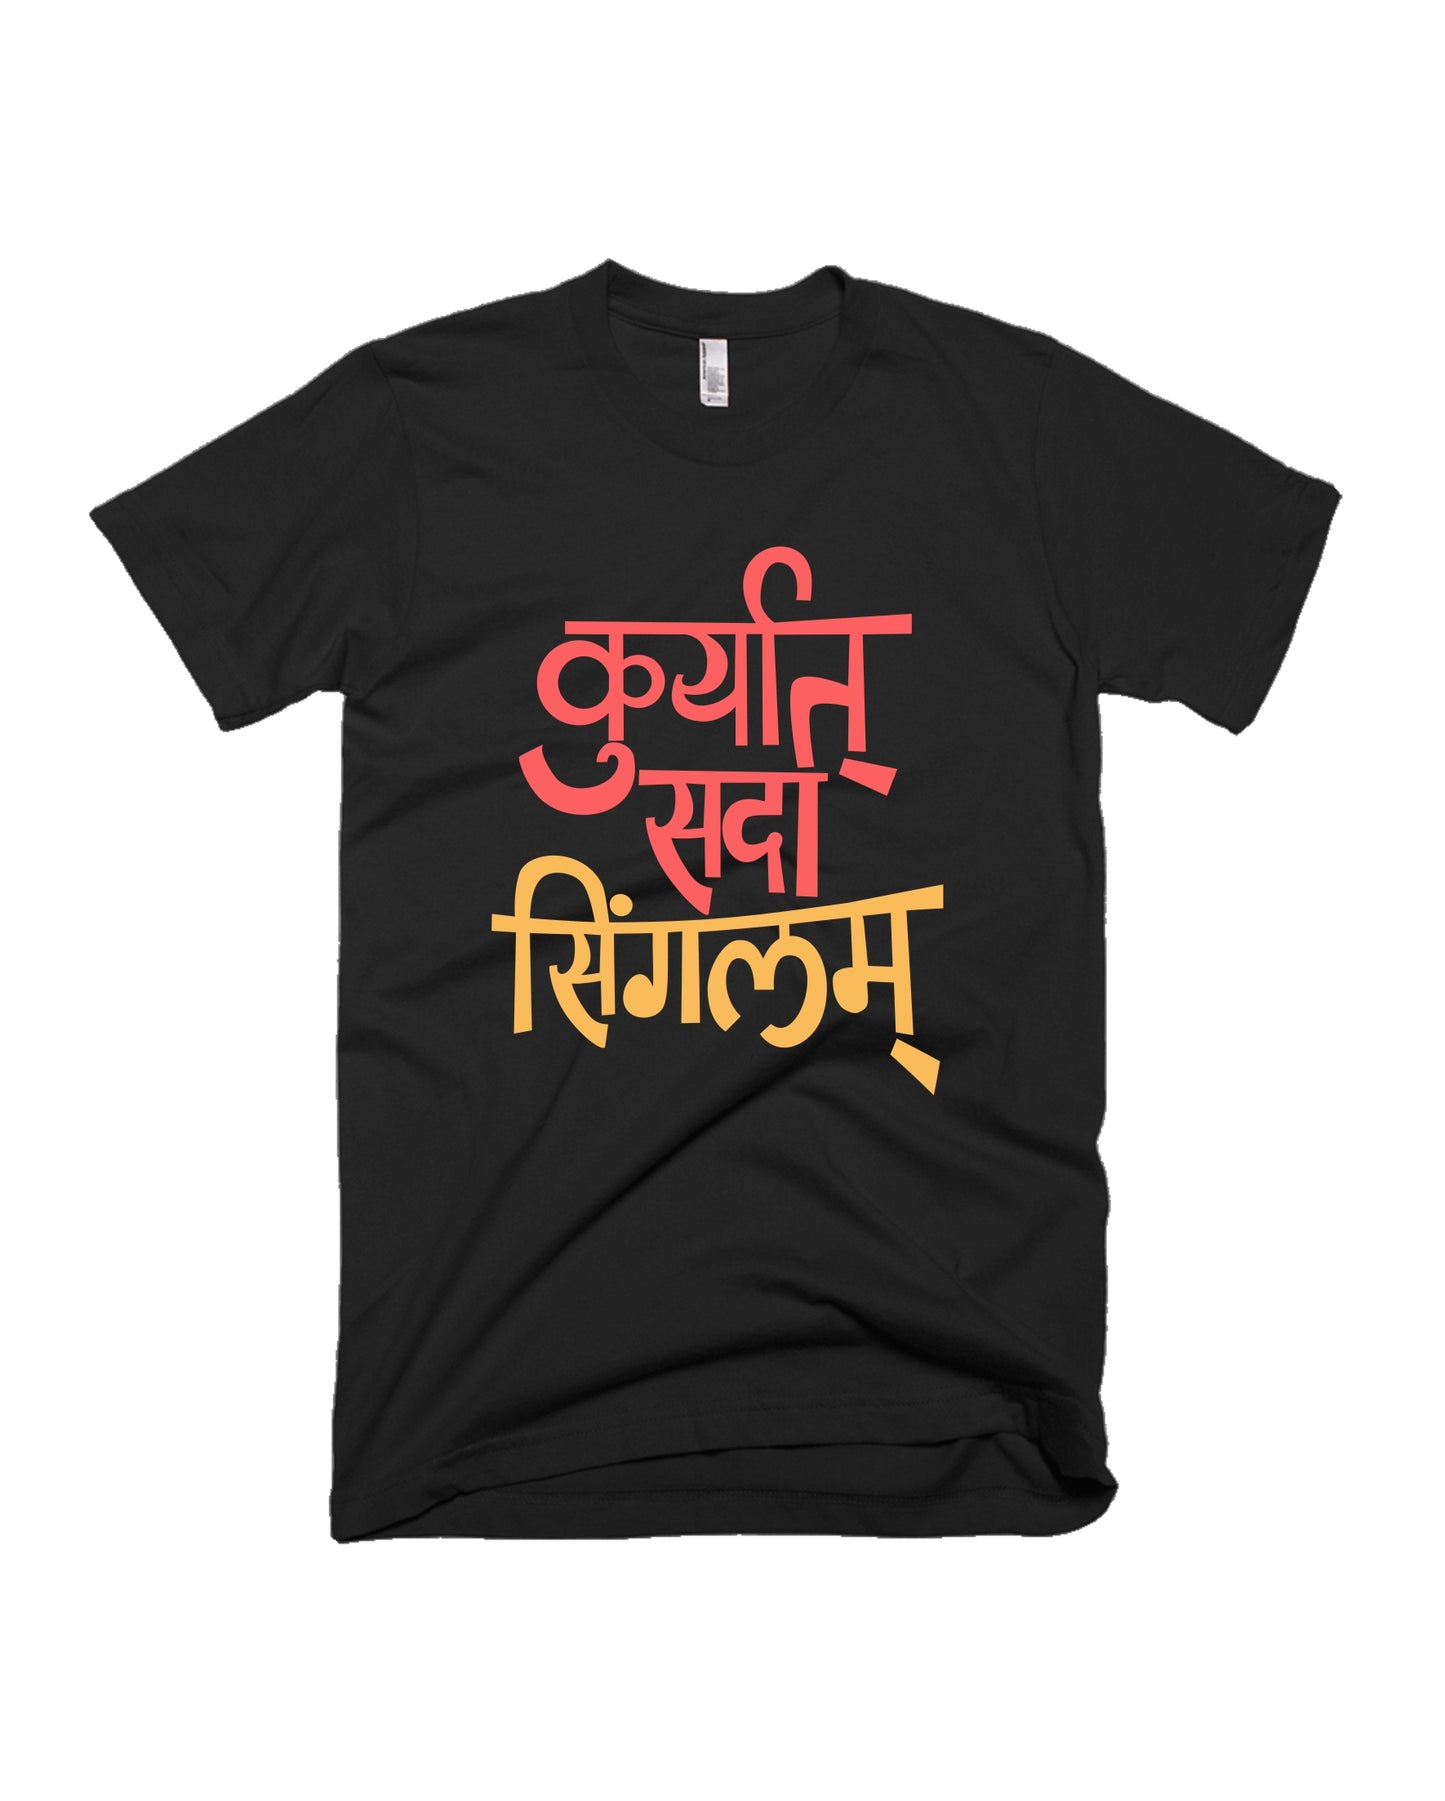 Kuryat Sada Single'm - Black - Unisex Adults T-shirt